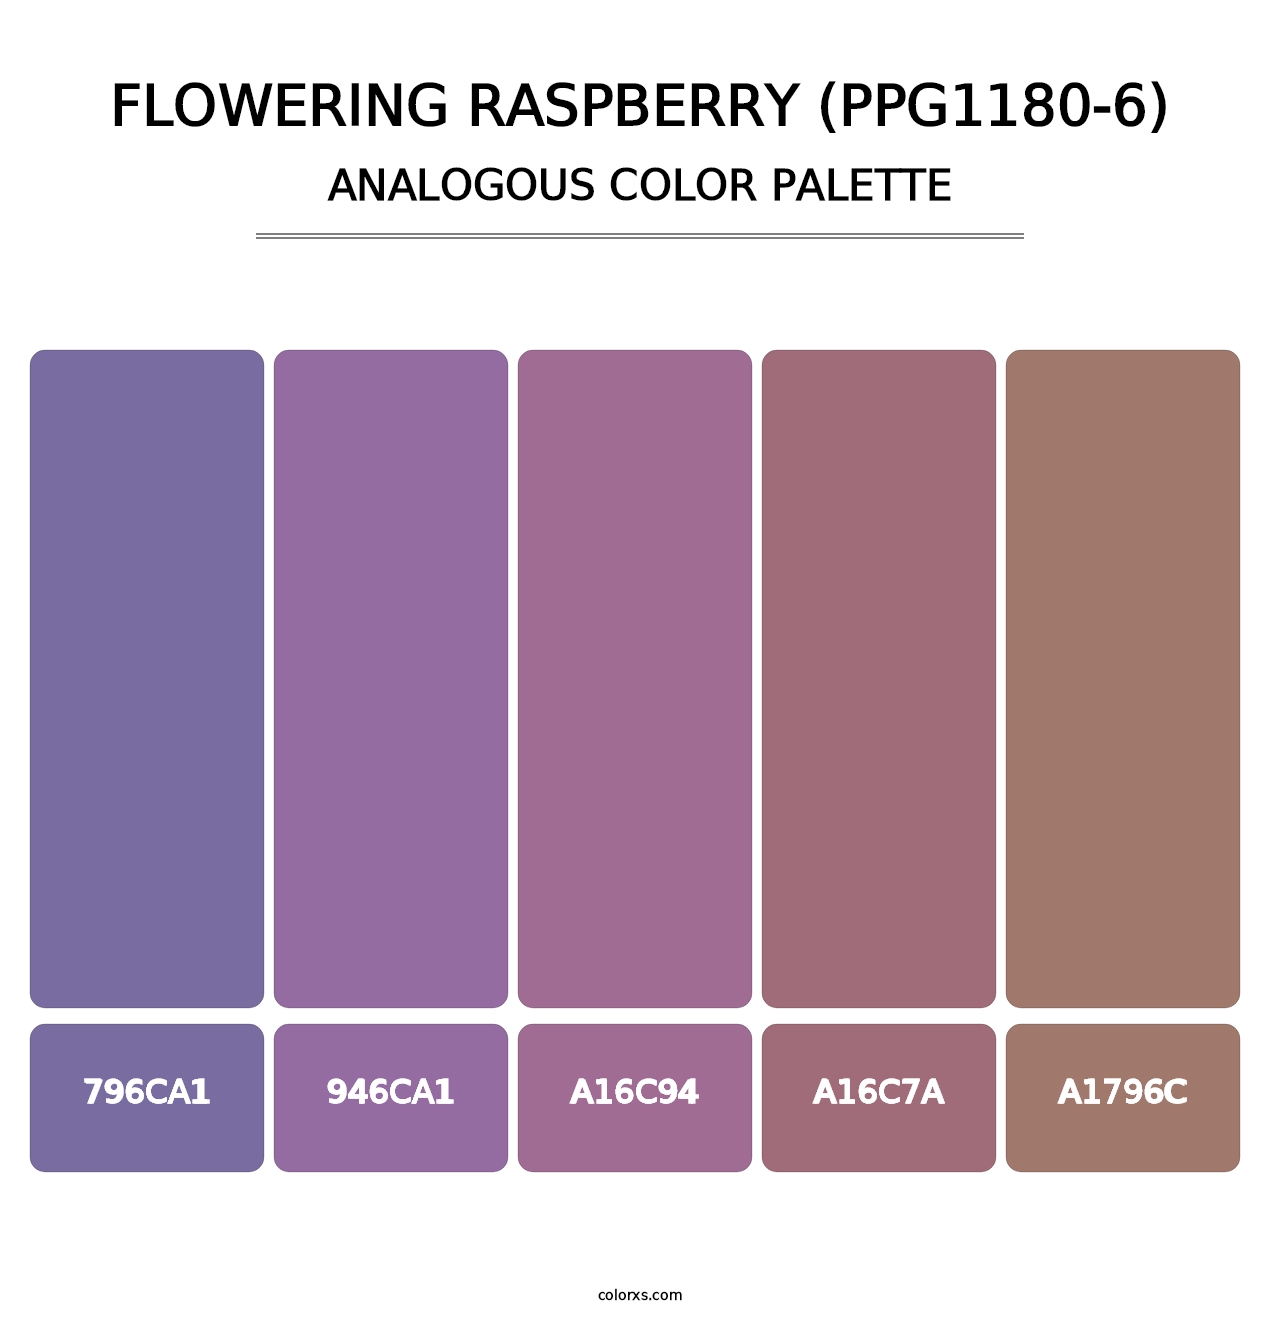 Flowering Raspberry (PPG1180-6) - Analogous Color Palette